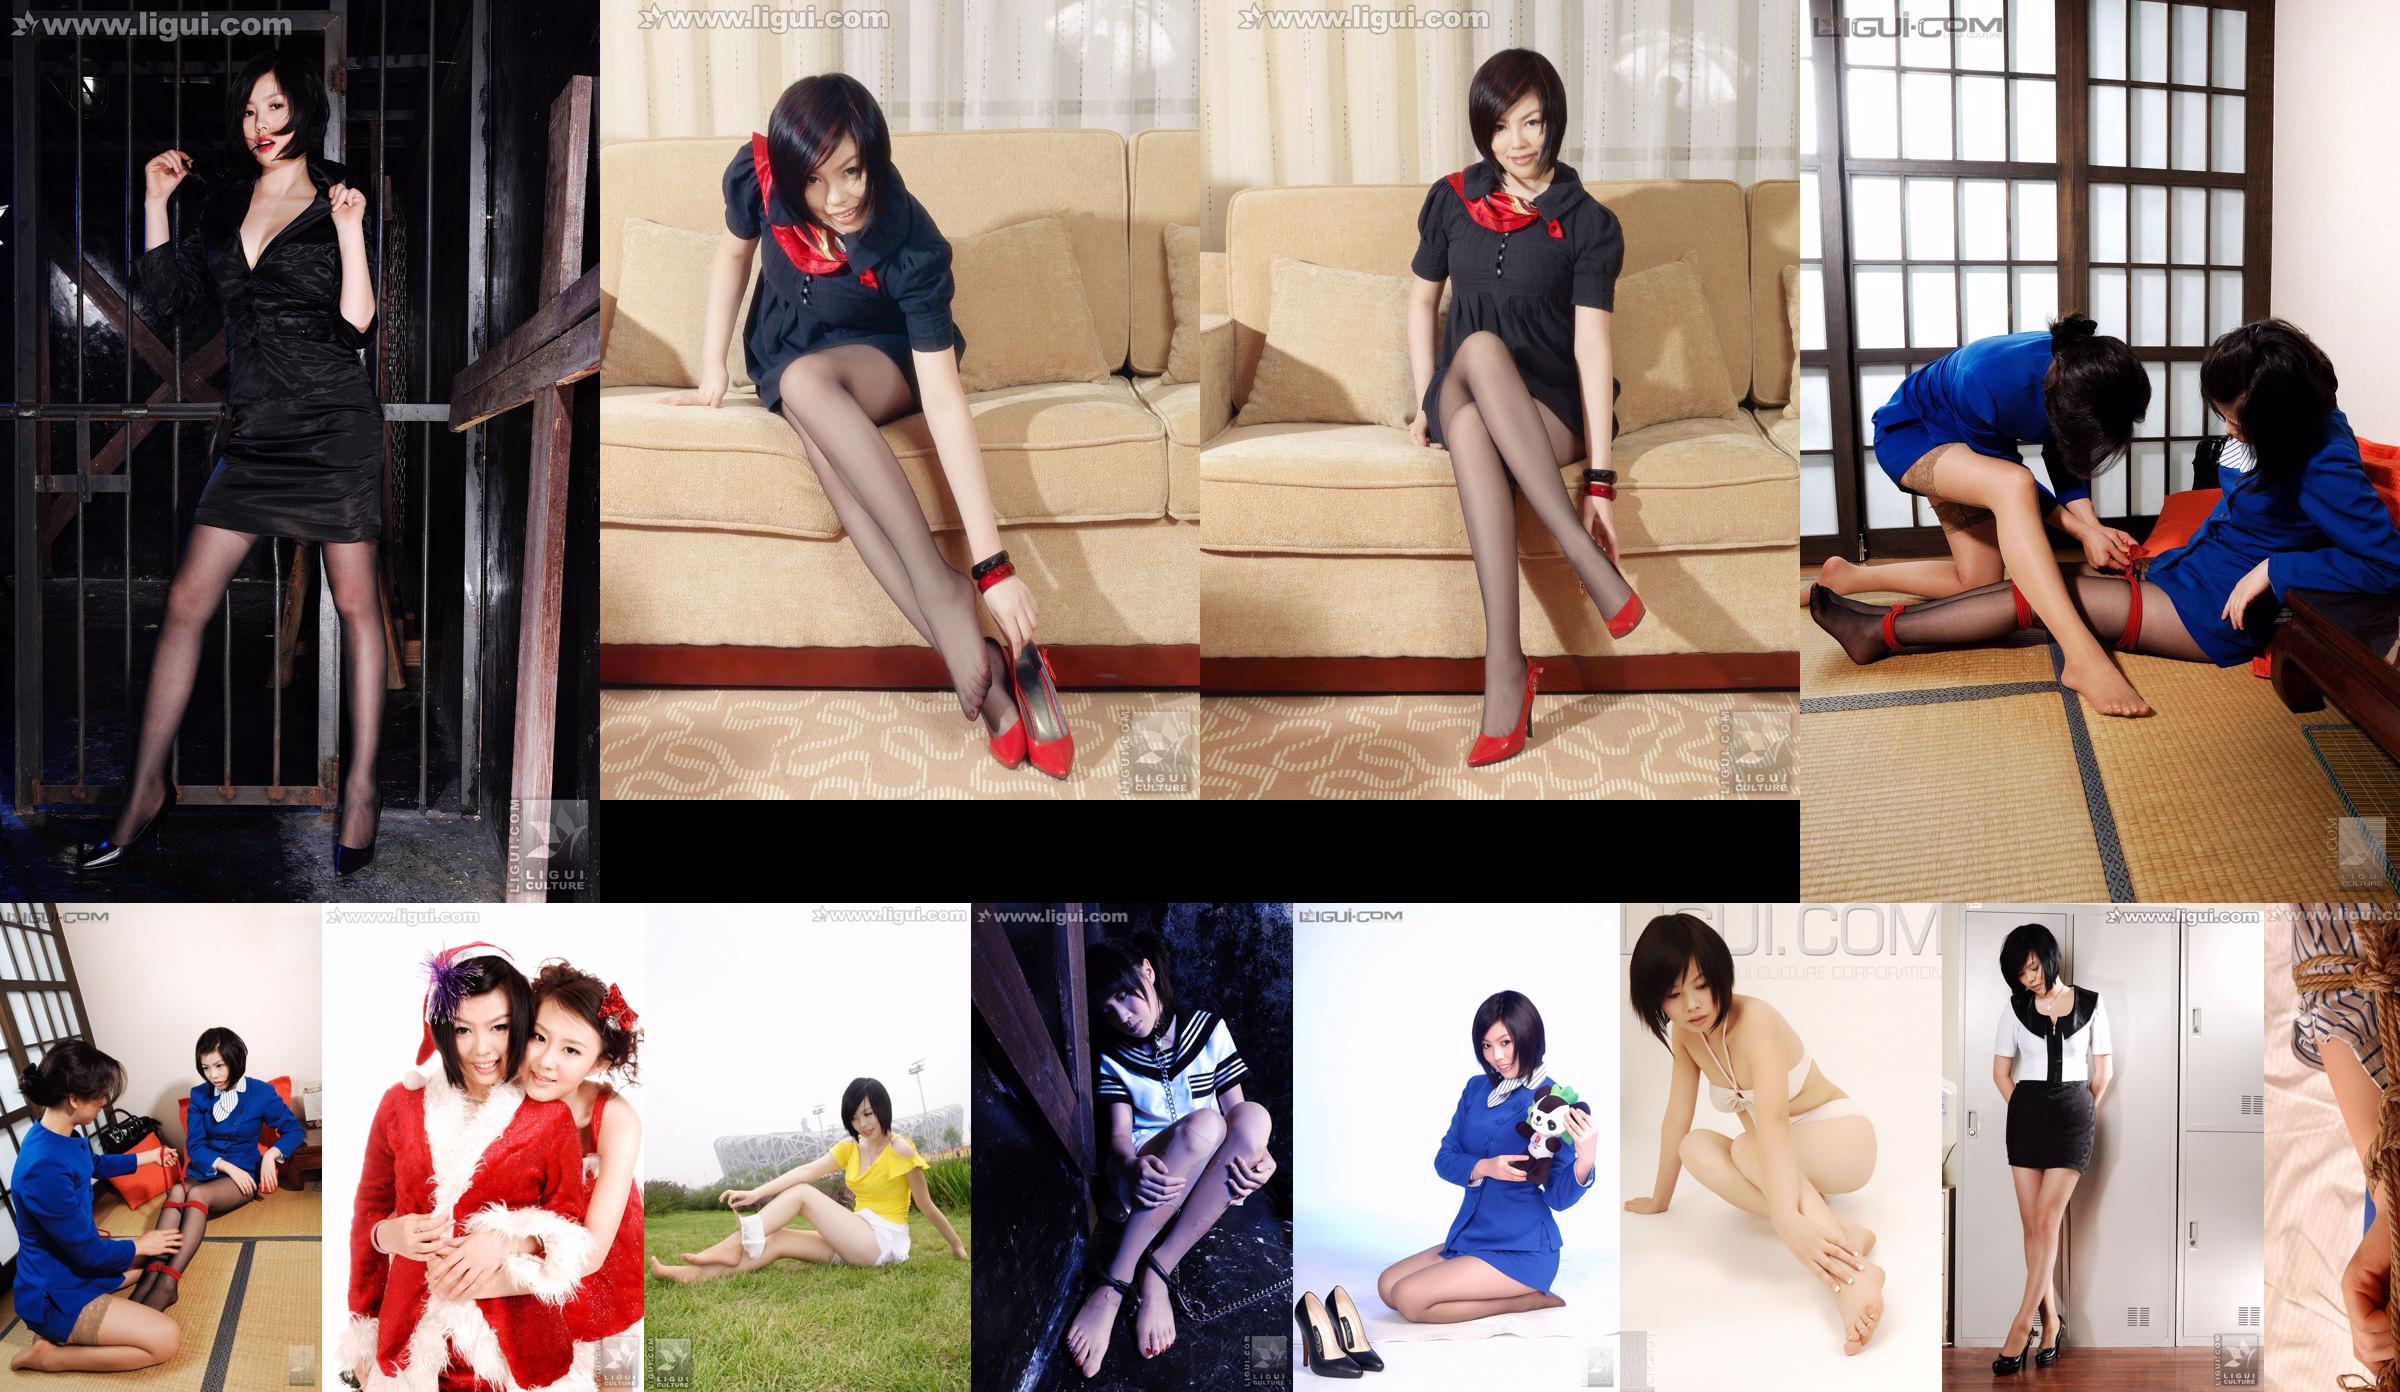 Model "Cute Pajama Foot Show" [Ligui LiGui] Stockings Foot Photo Picture No.965e2d Page 1